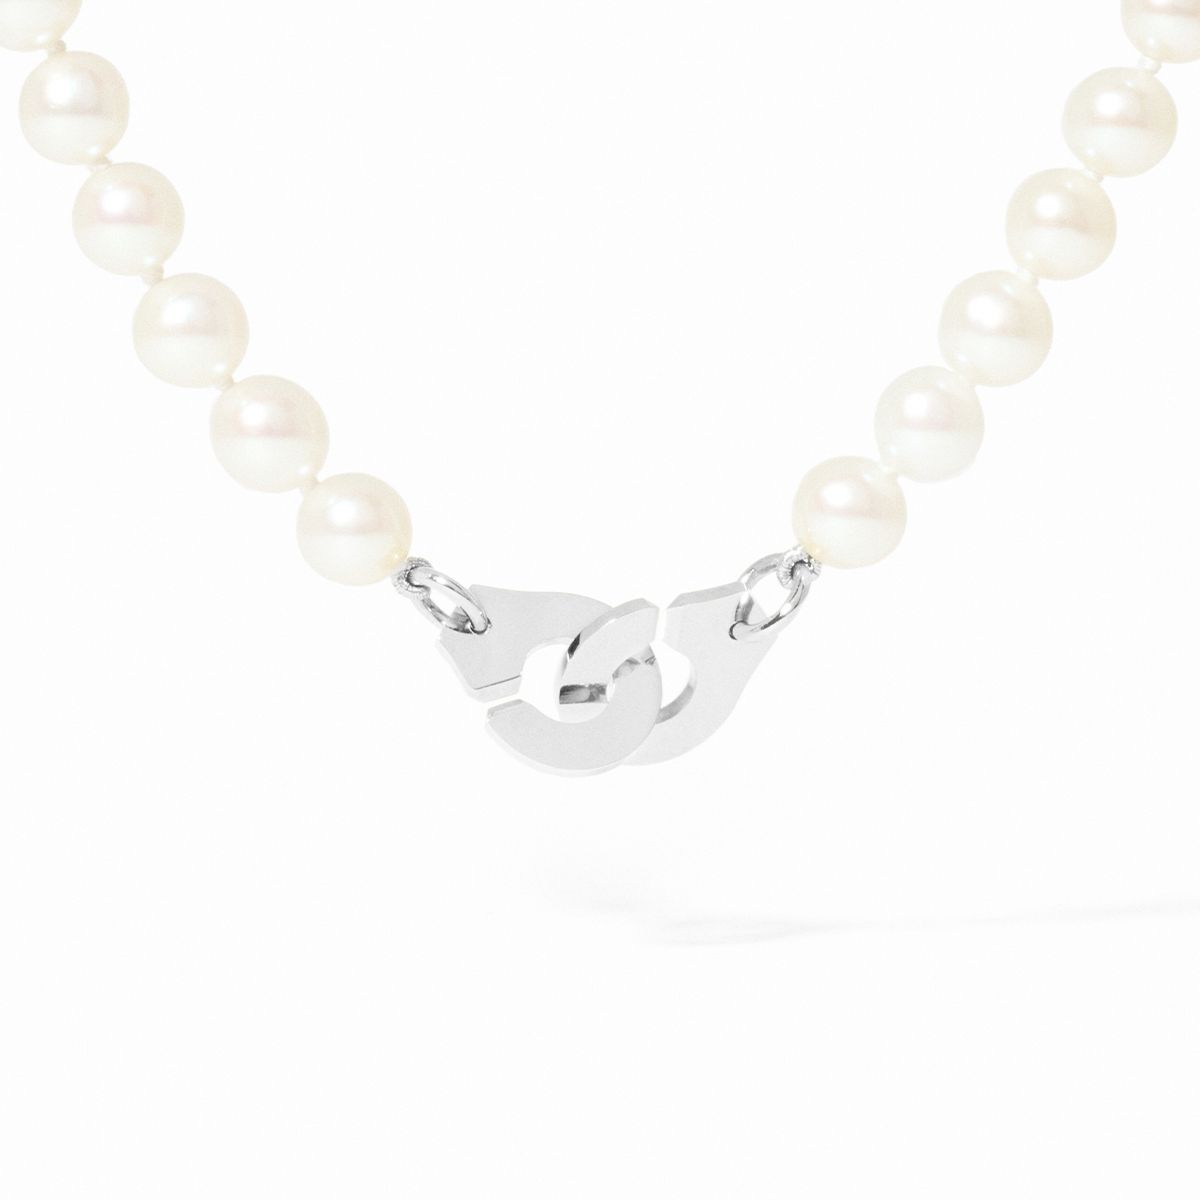 Menottes dinh van R10 pearl necklace